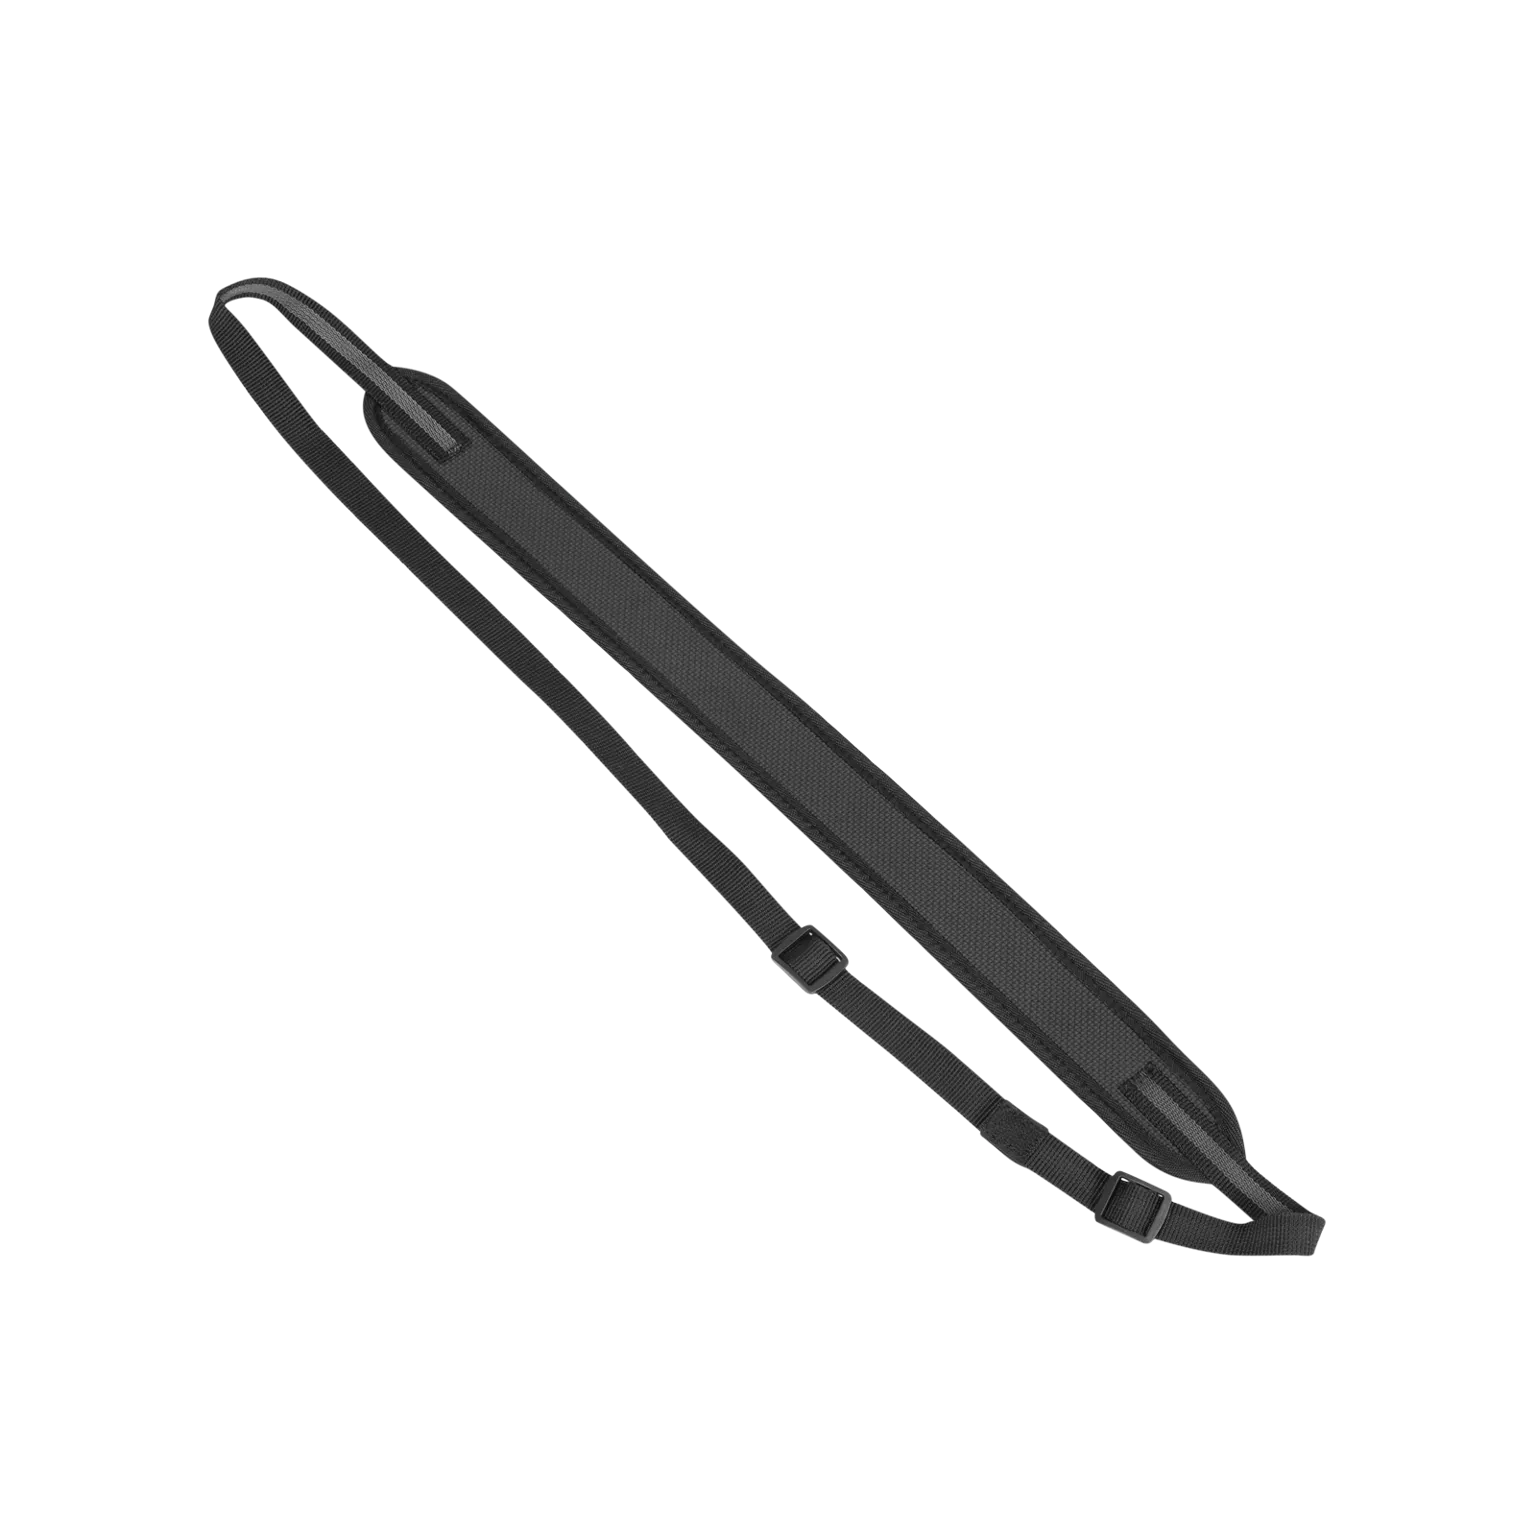 Aimpoint® Rifle sling Orange - Adjustable length  - 3